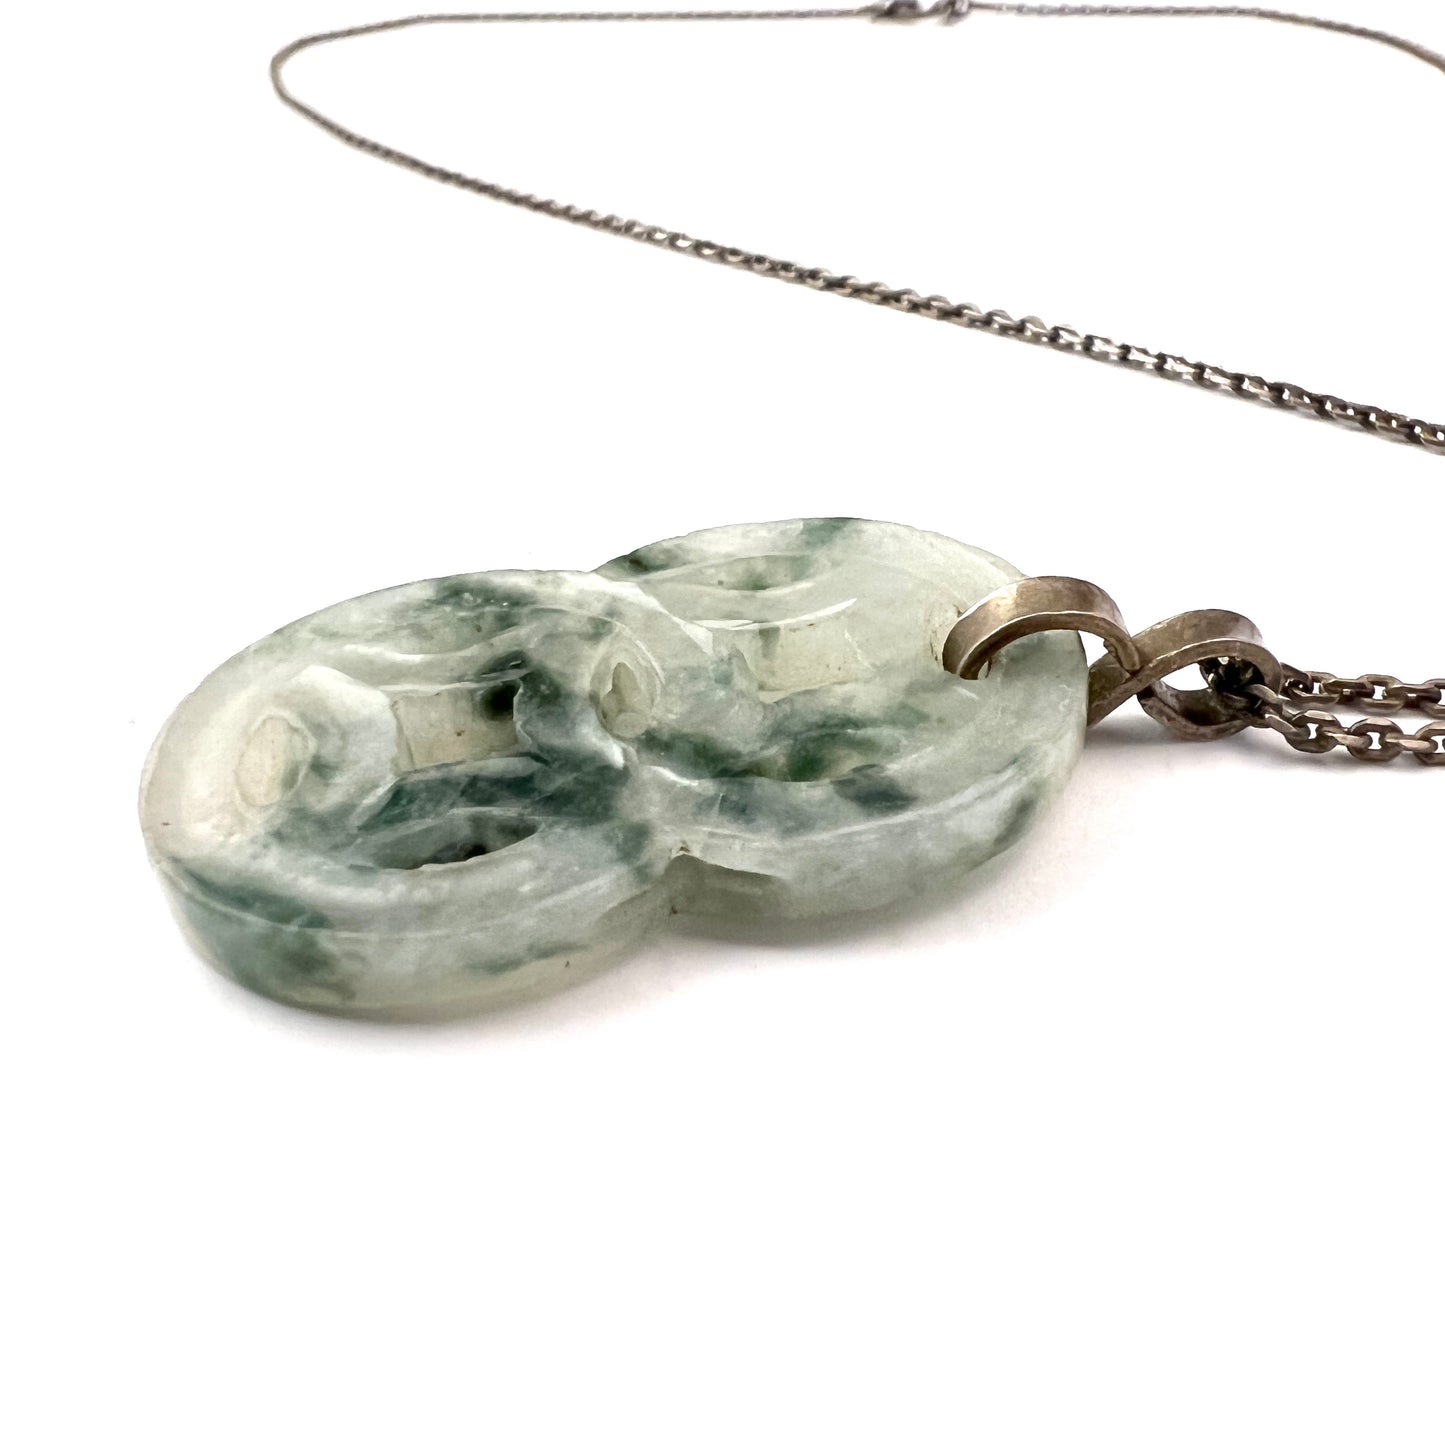 East Asia. Vintage Carved Jadeite Pendant Silver Necklace.